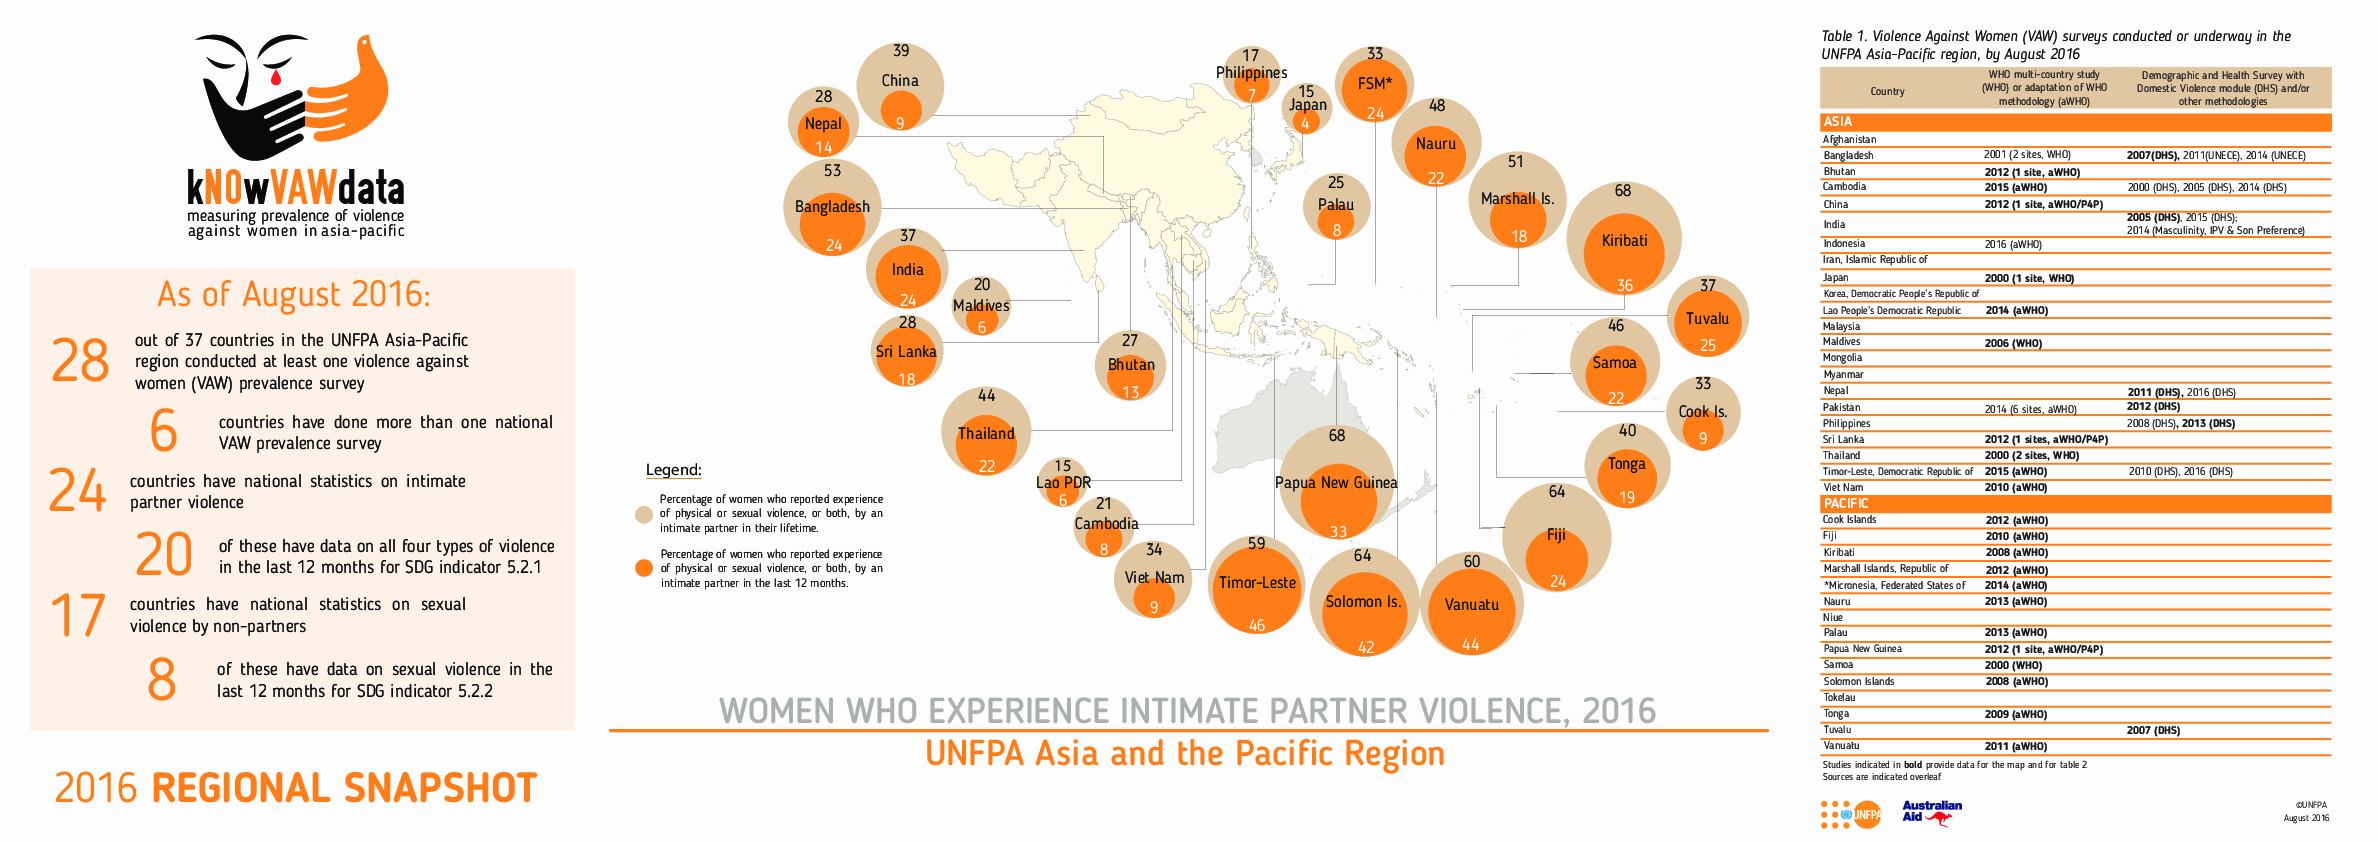 Violence Against Women - Regional Snapshot (2016)